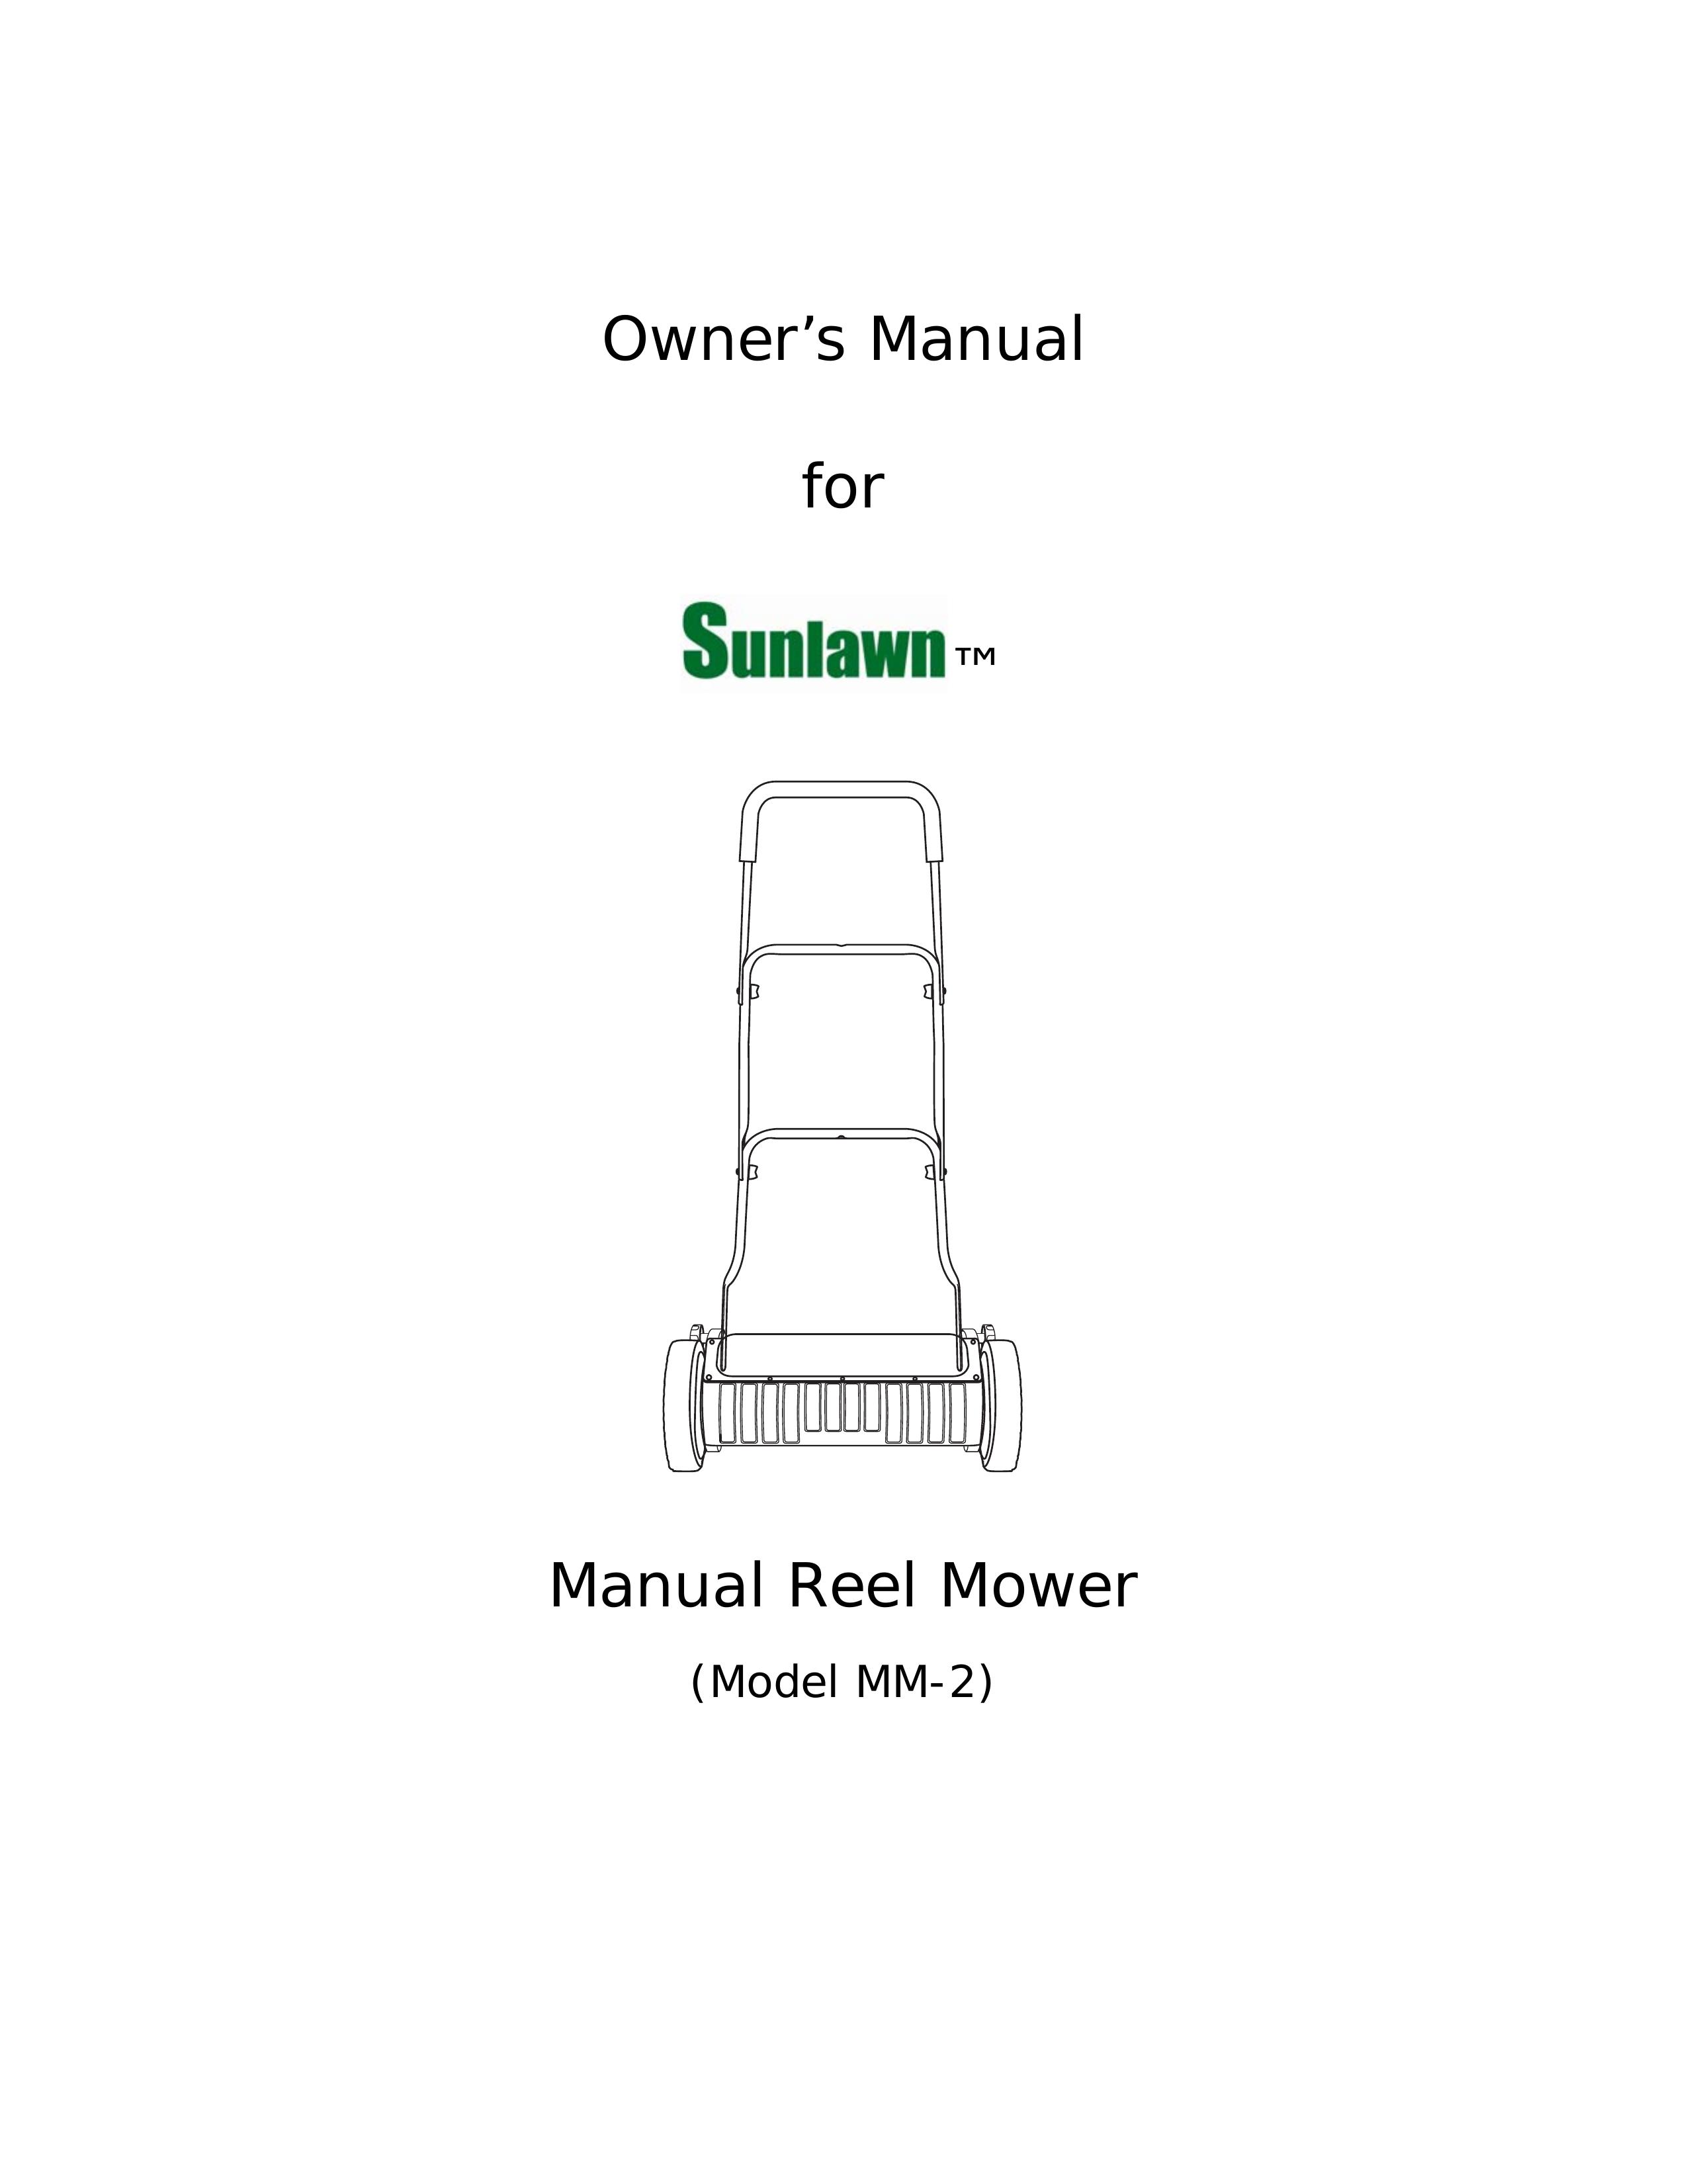 Sun Lawn MM-2 Lawn Mower User Manual